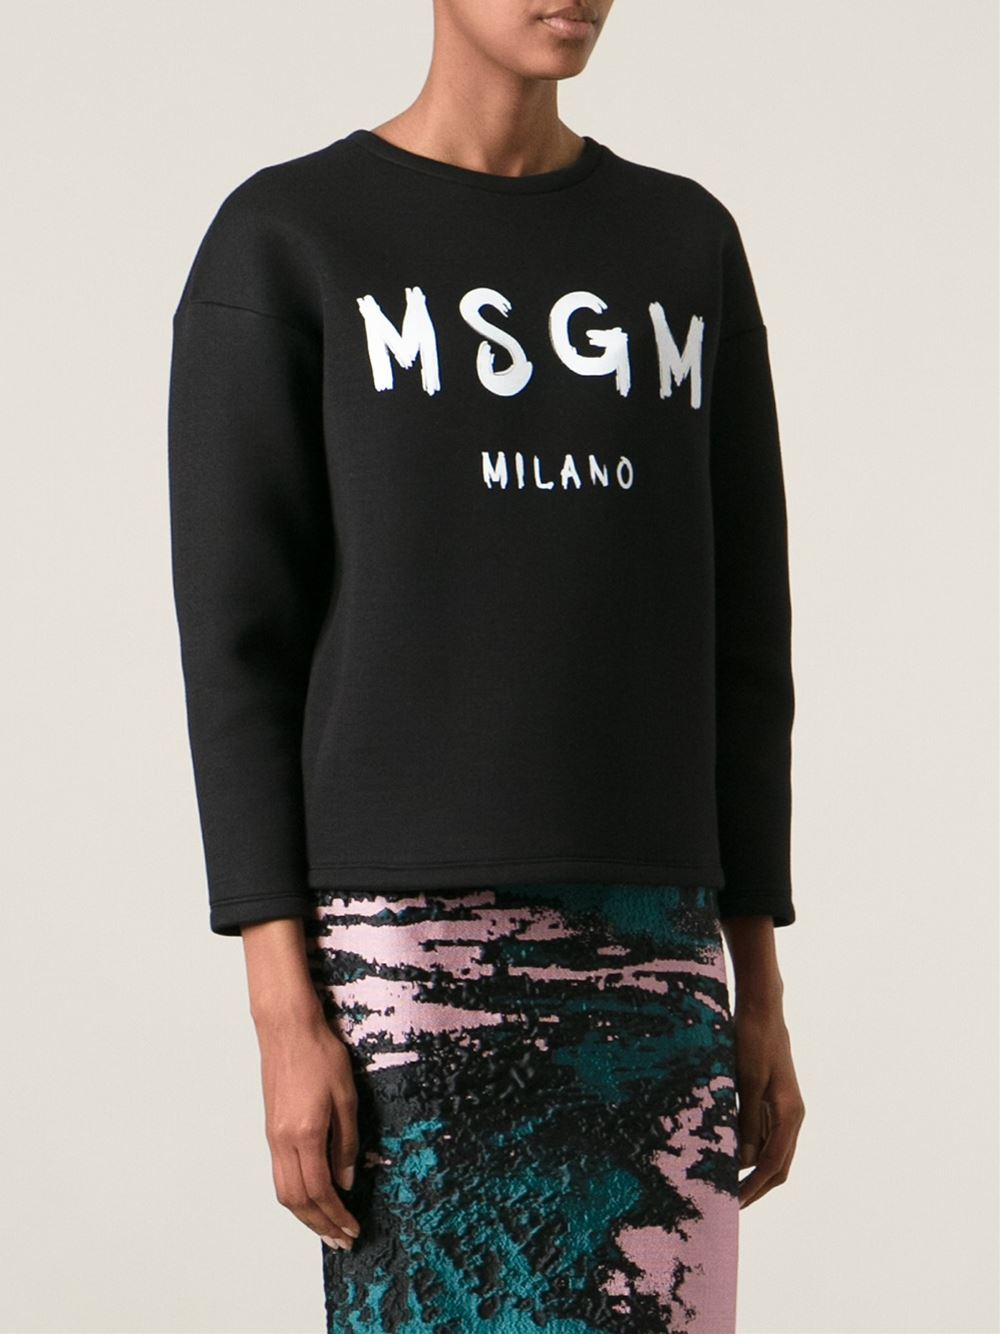 Msgm Logo Printed Sweatshirt in Black | Lyst